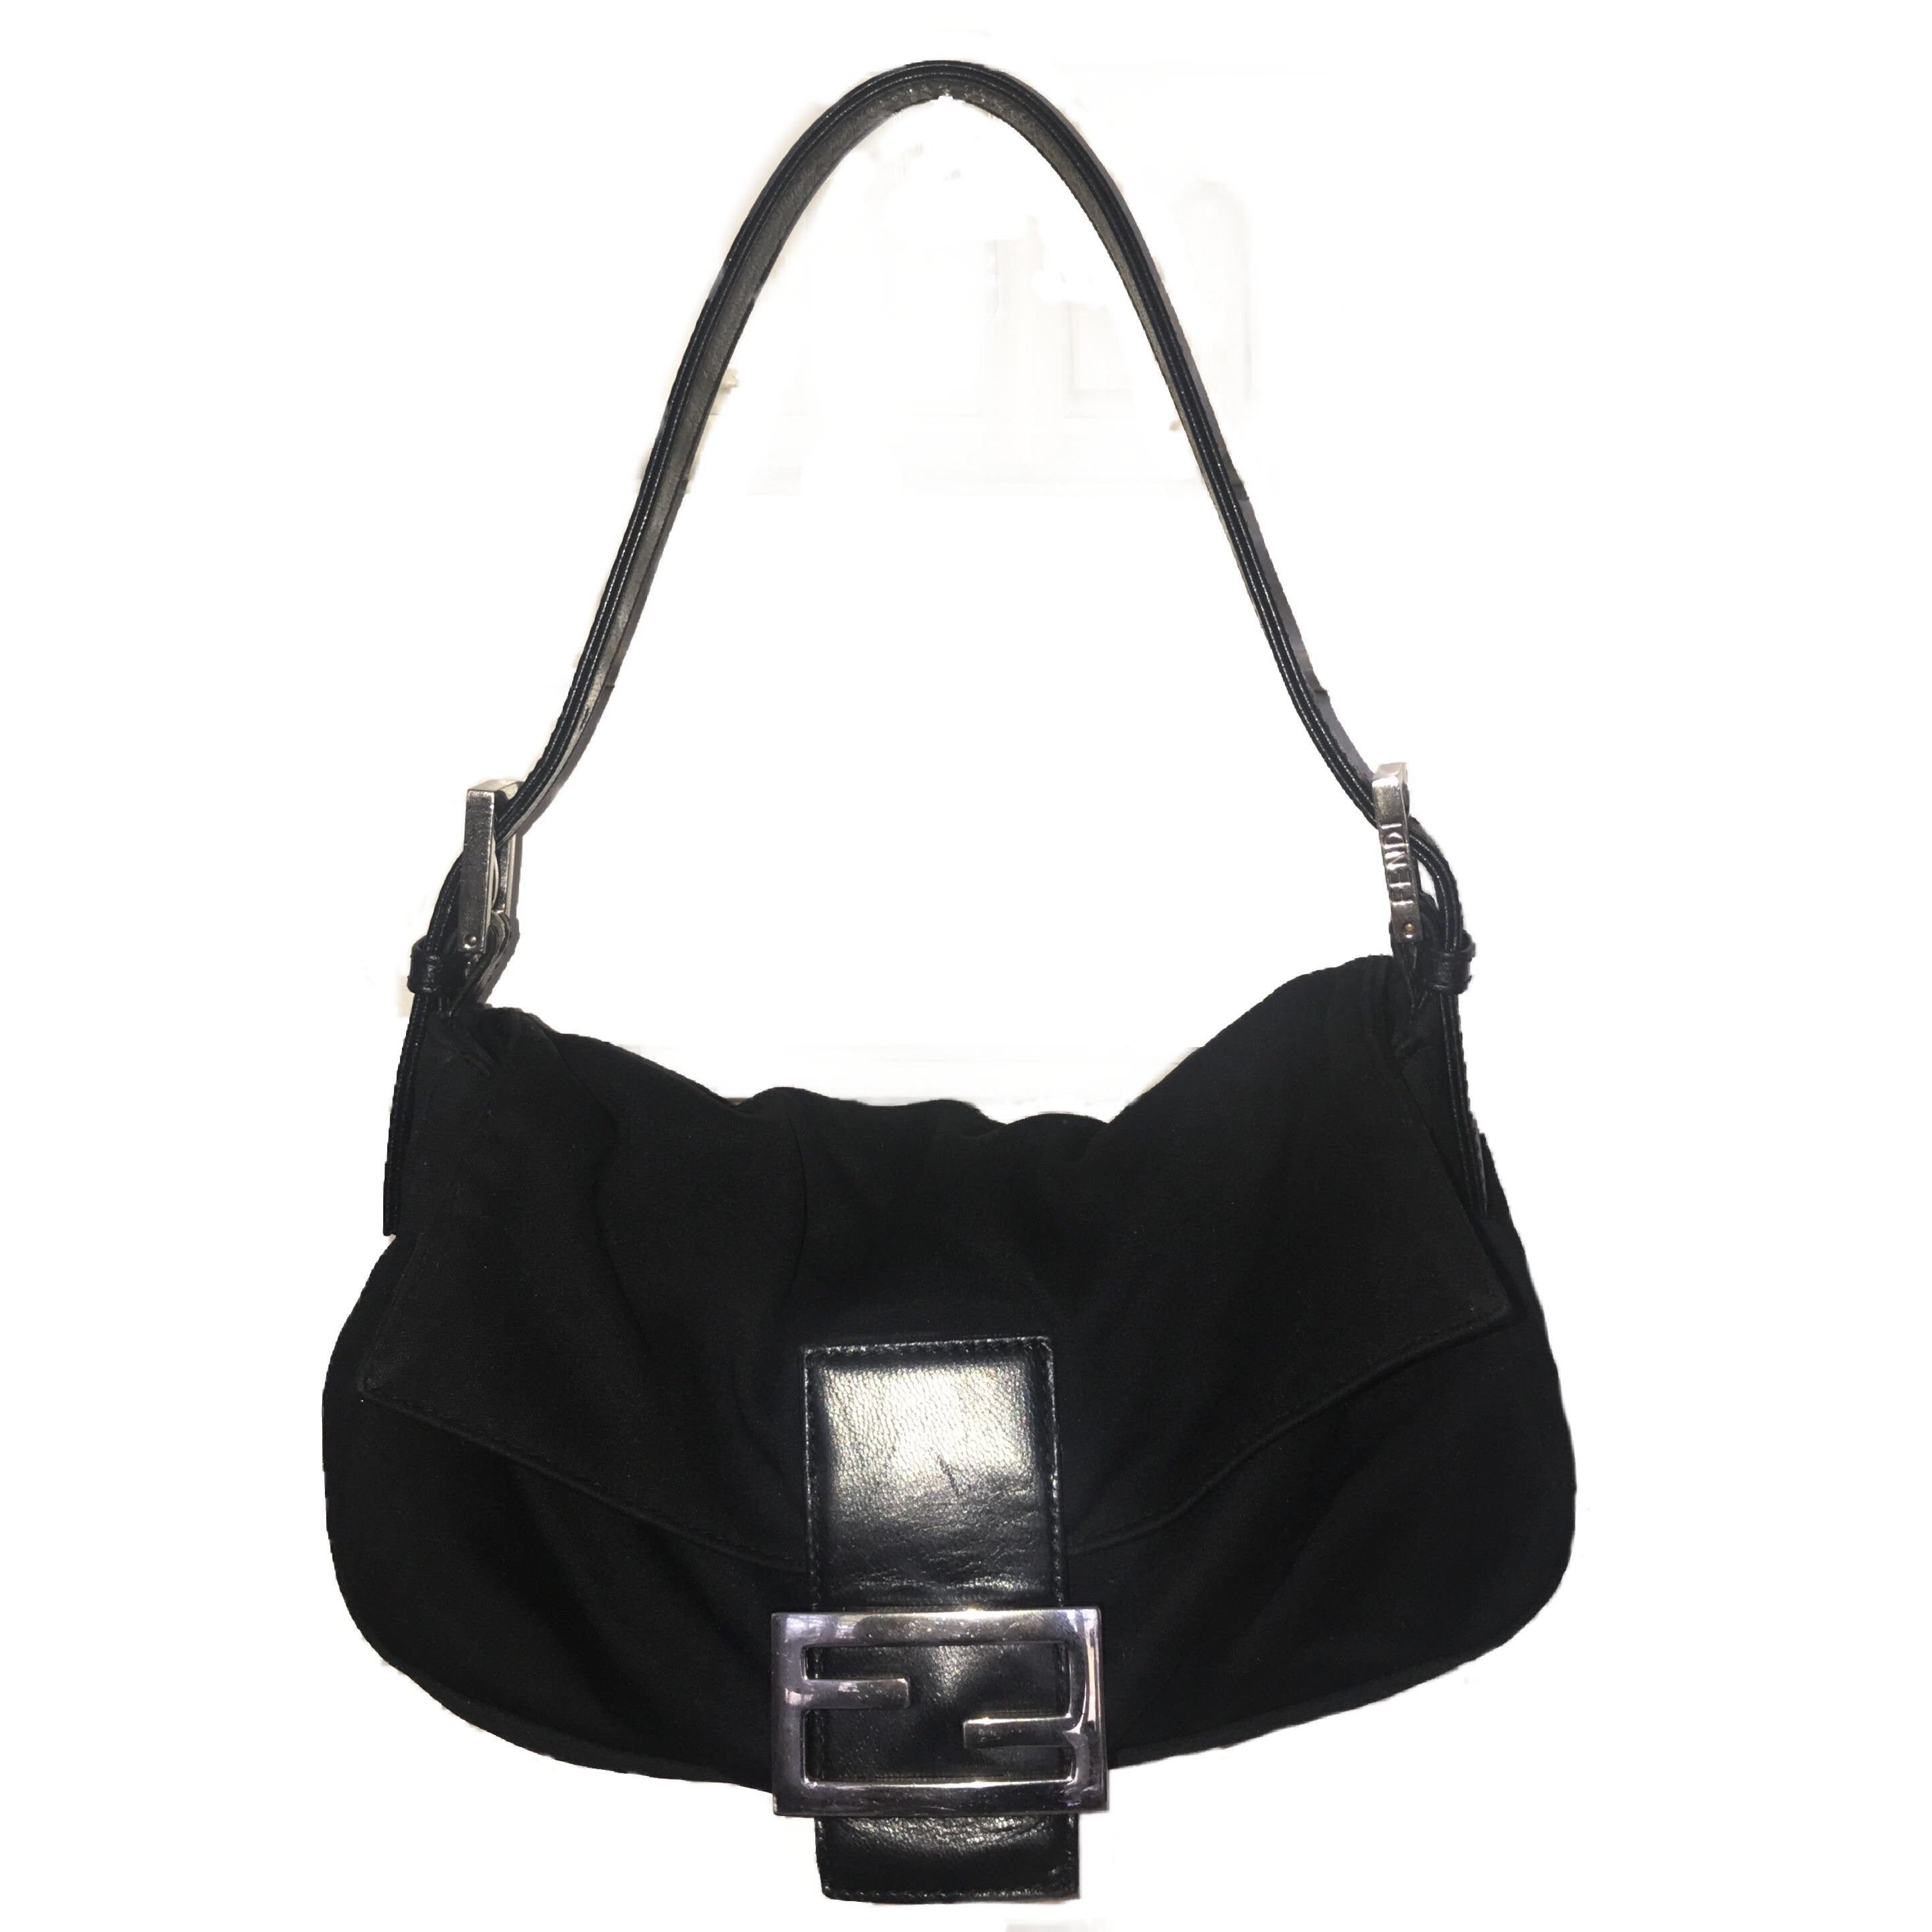 Buy the Coach Monogrammed Baguette Bag Black